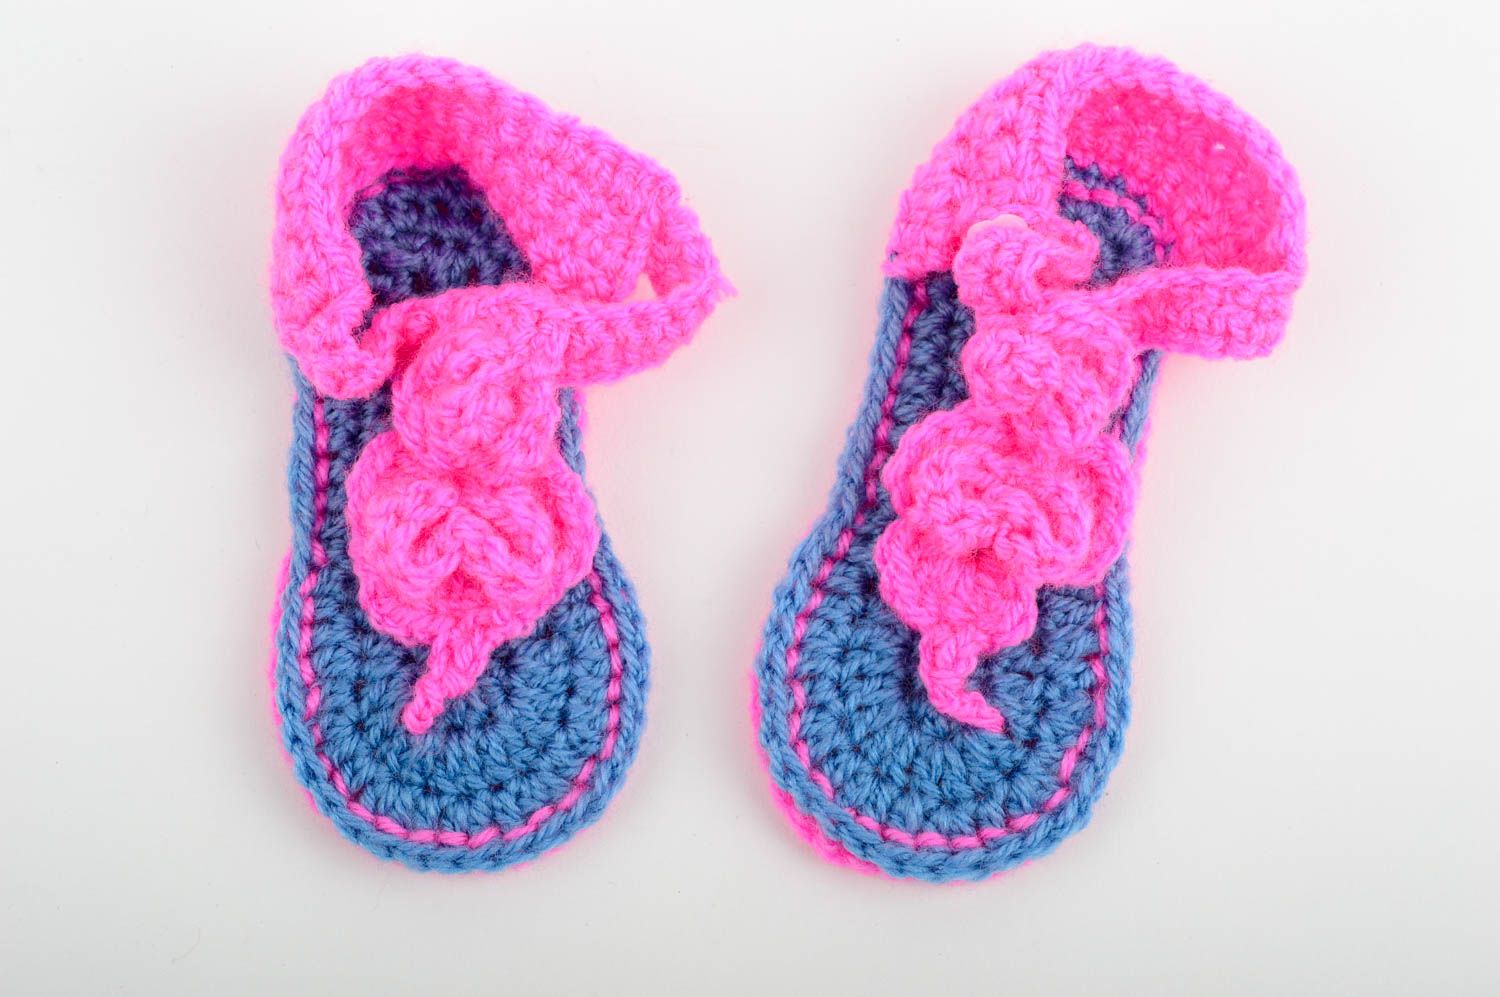 Handmade baby shoes baby socks crochet baby booties goods for children photo 3